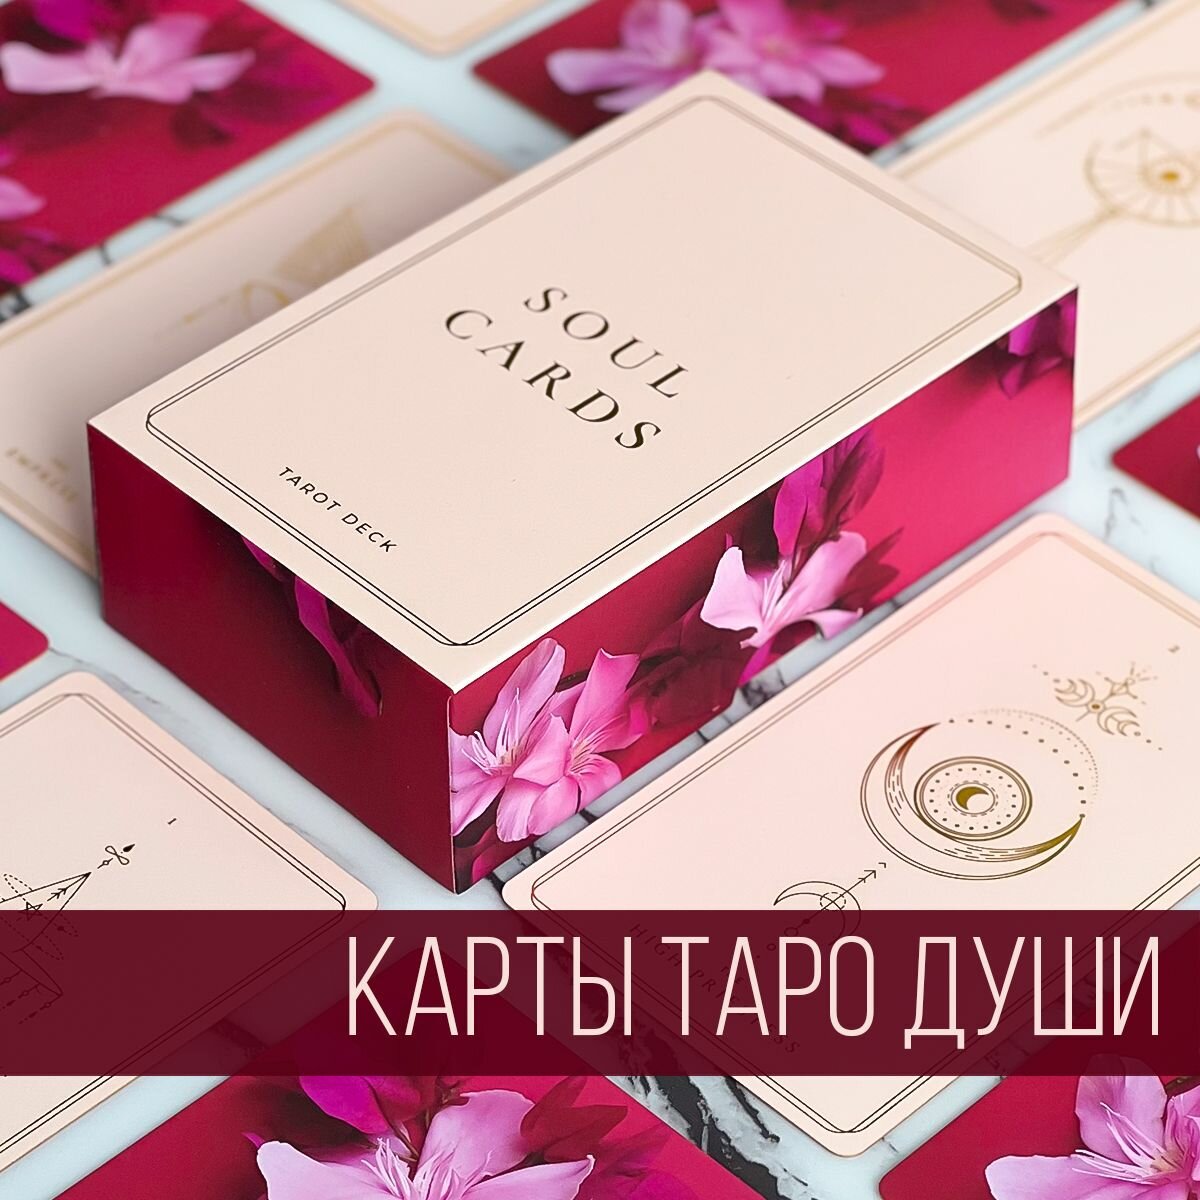 Таро Карты Души Розовый / Soul Cards Tarot Blush Pink